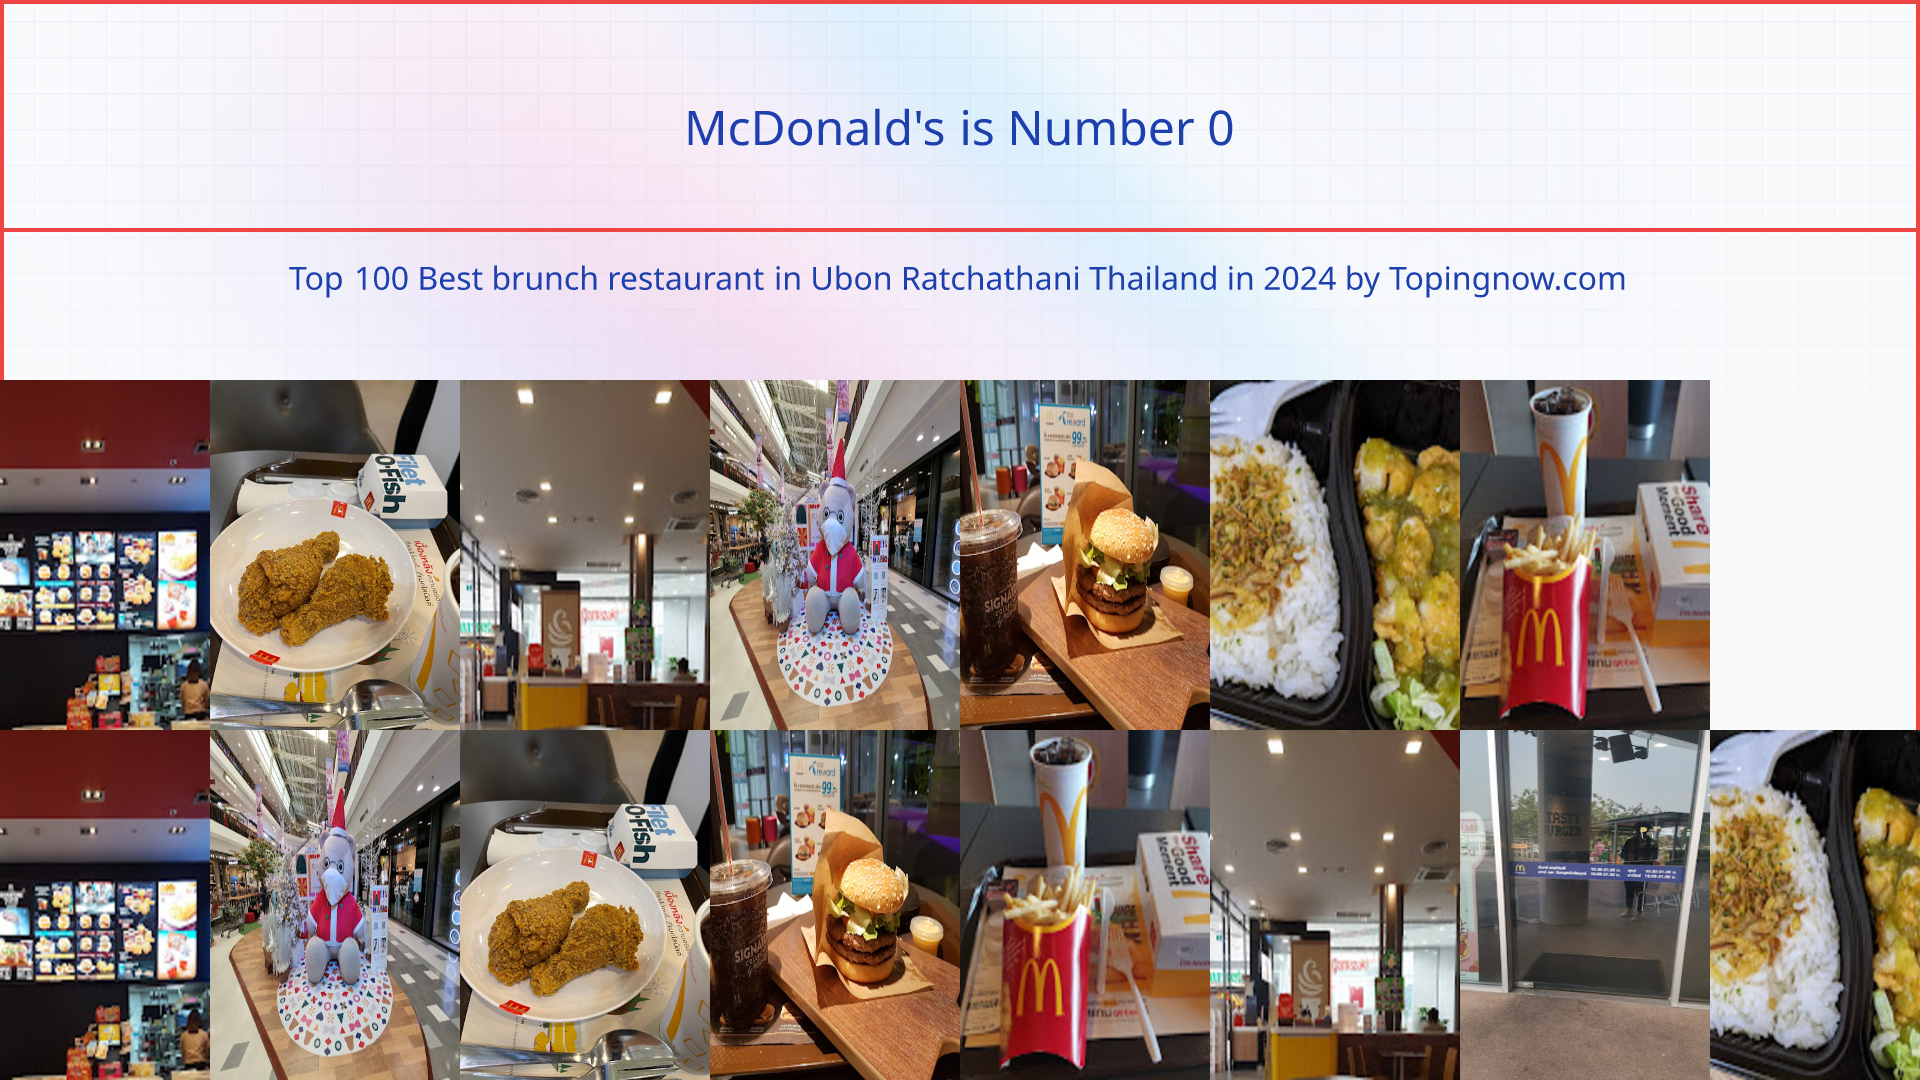 McDonald's: Top 100 Best brunch restaurant in Ubon Ratchathani Thailand in 2024